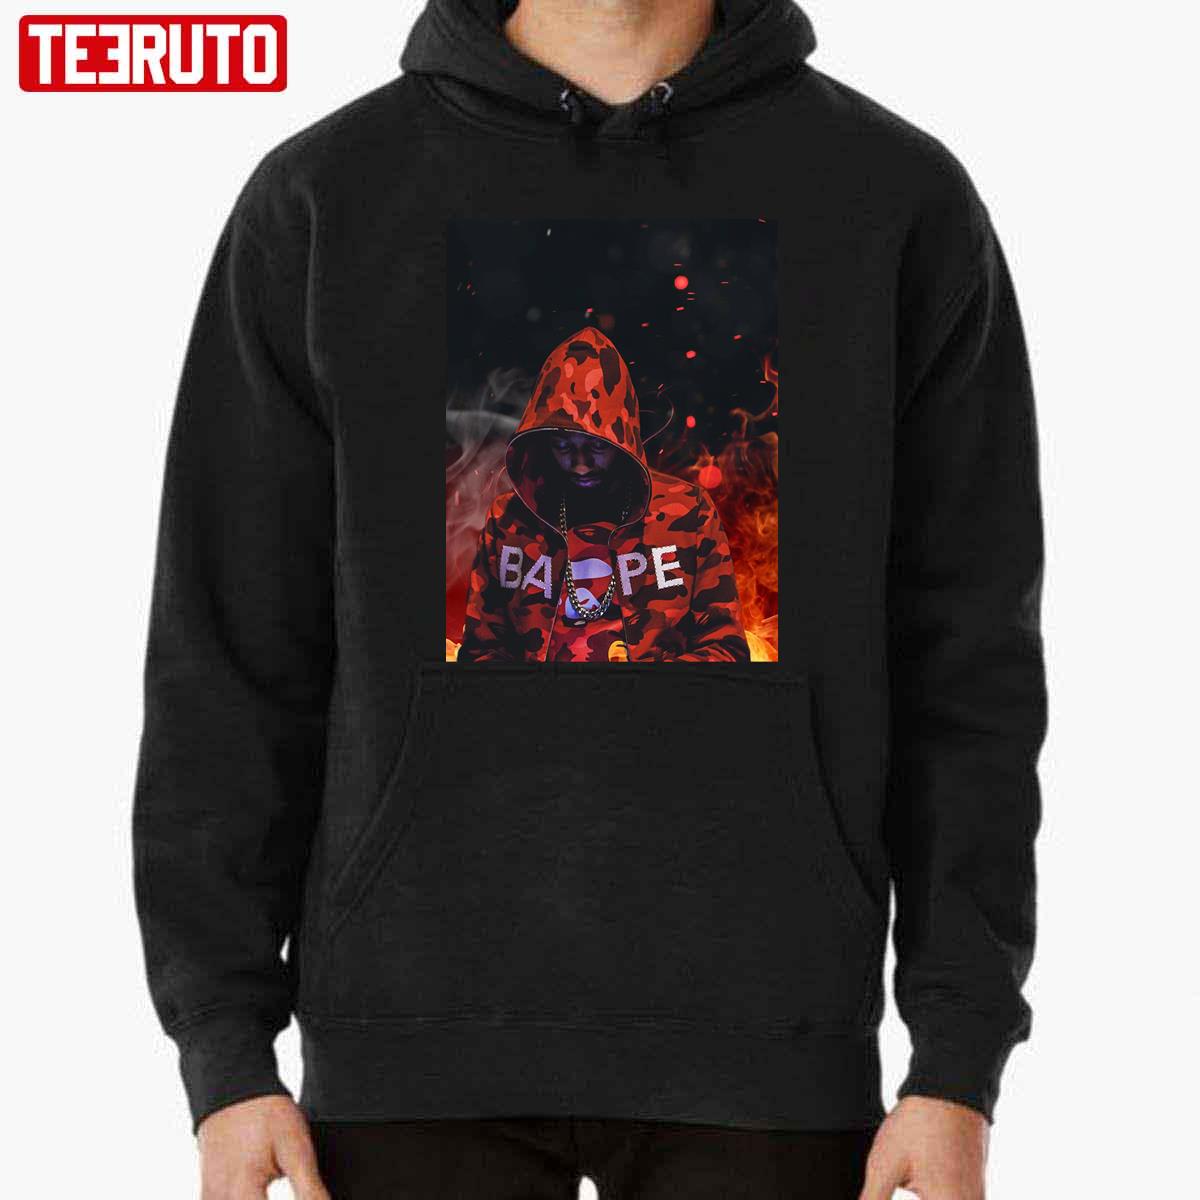 Pnb Rock Bape Fire Unisex Sweatshirt